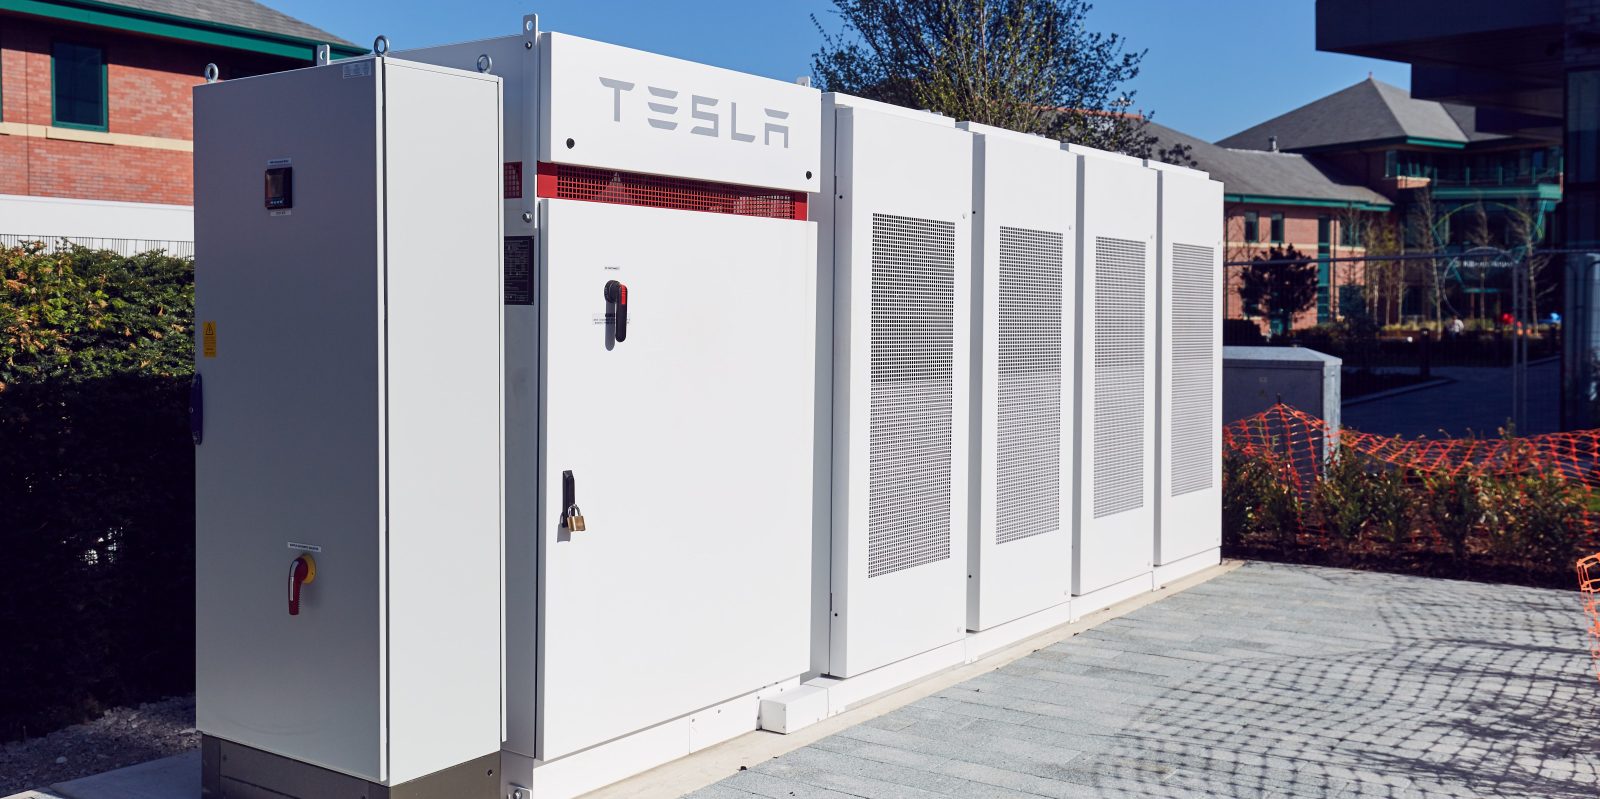 Tesla deployed a new Powerpack system in the UK - Electrek